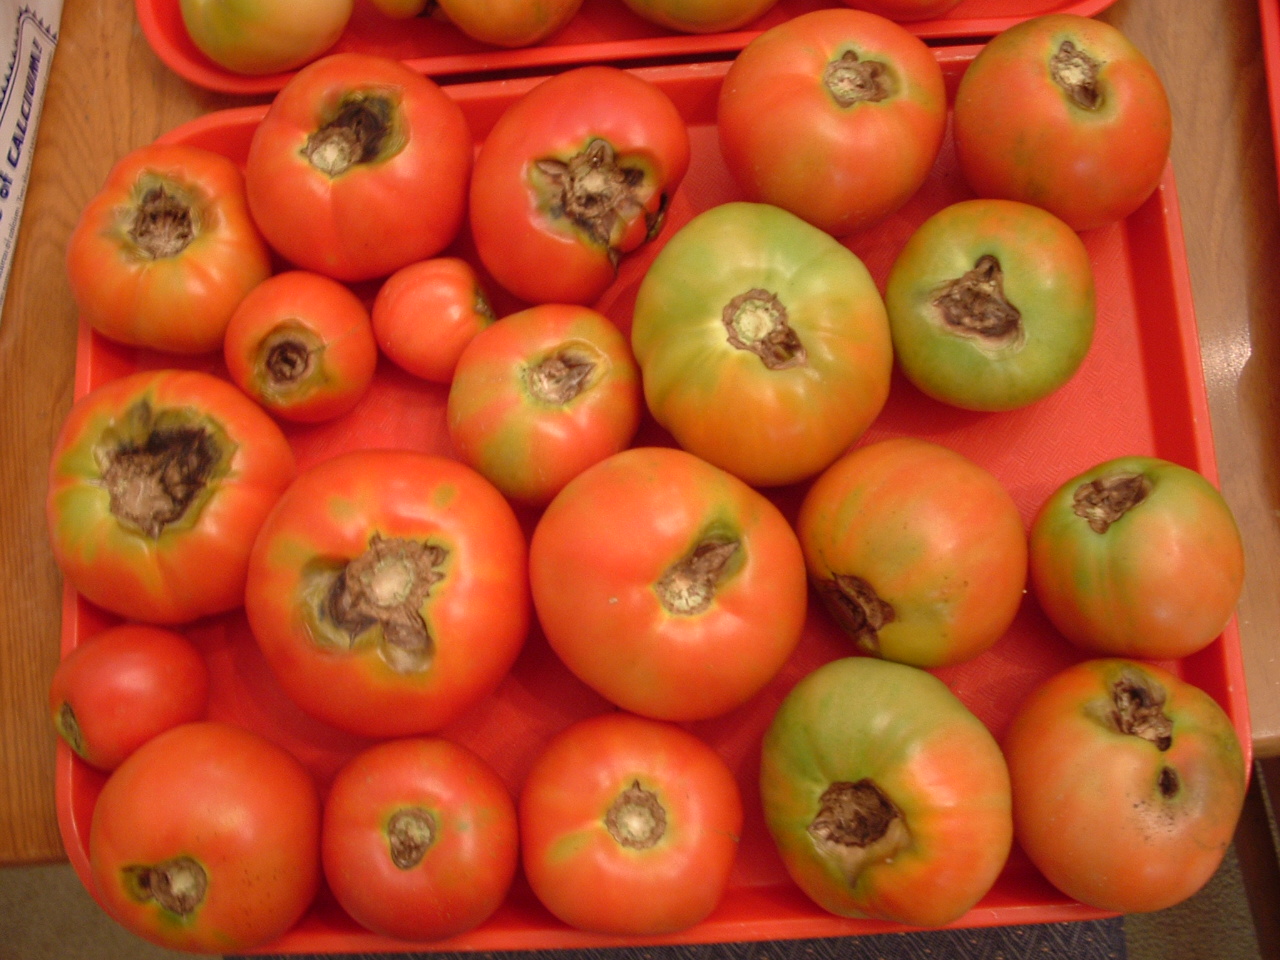 tomato early blight on fruit